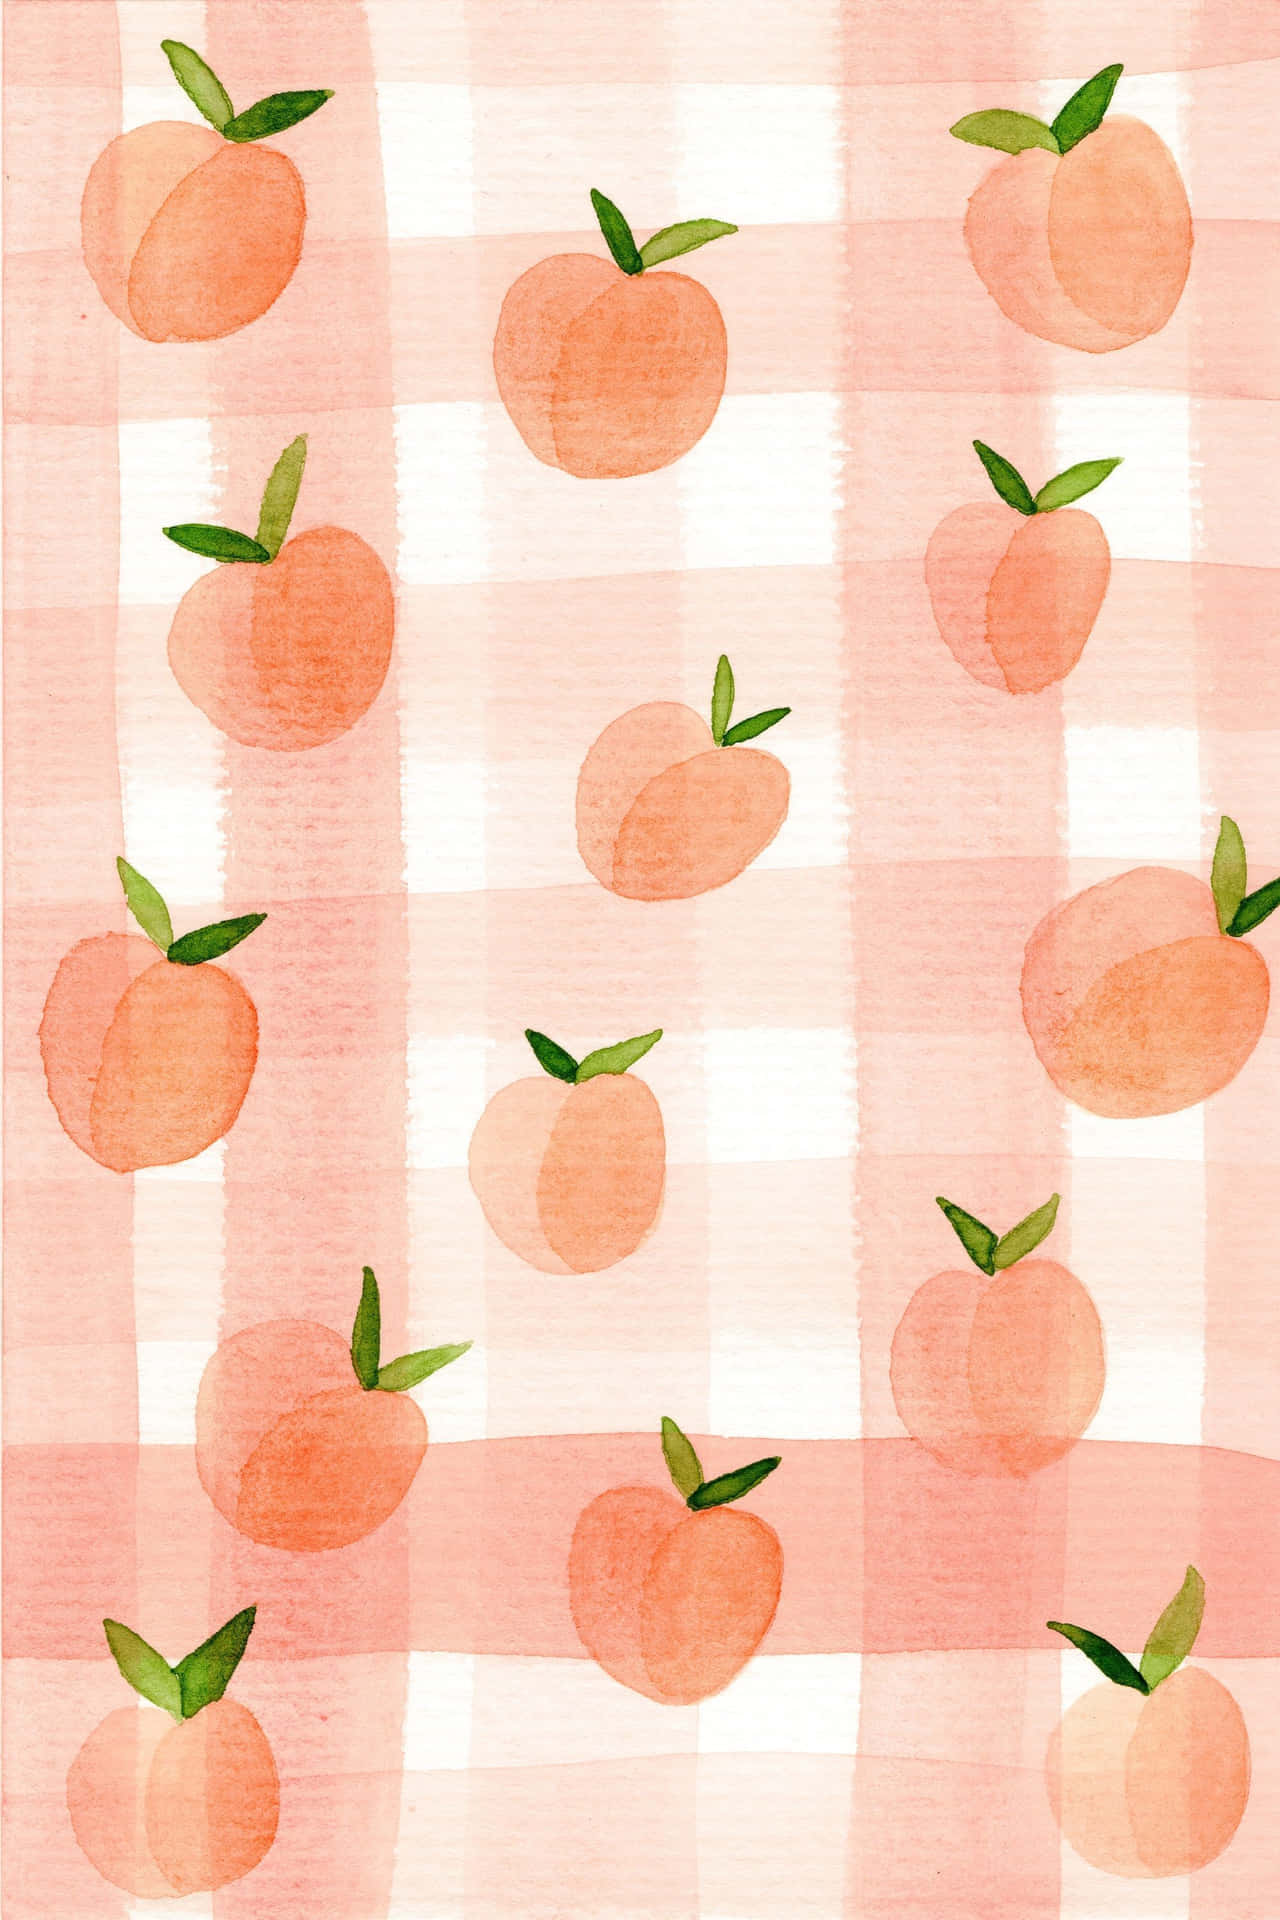 Peach iPhone wallpaper mobile background  Premium Vector  rawpixel